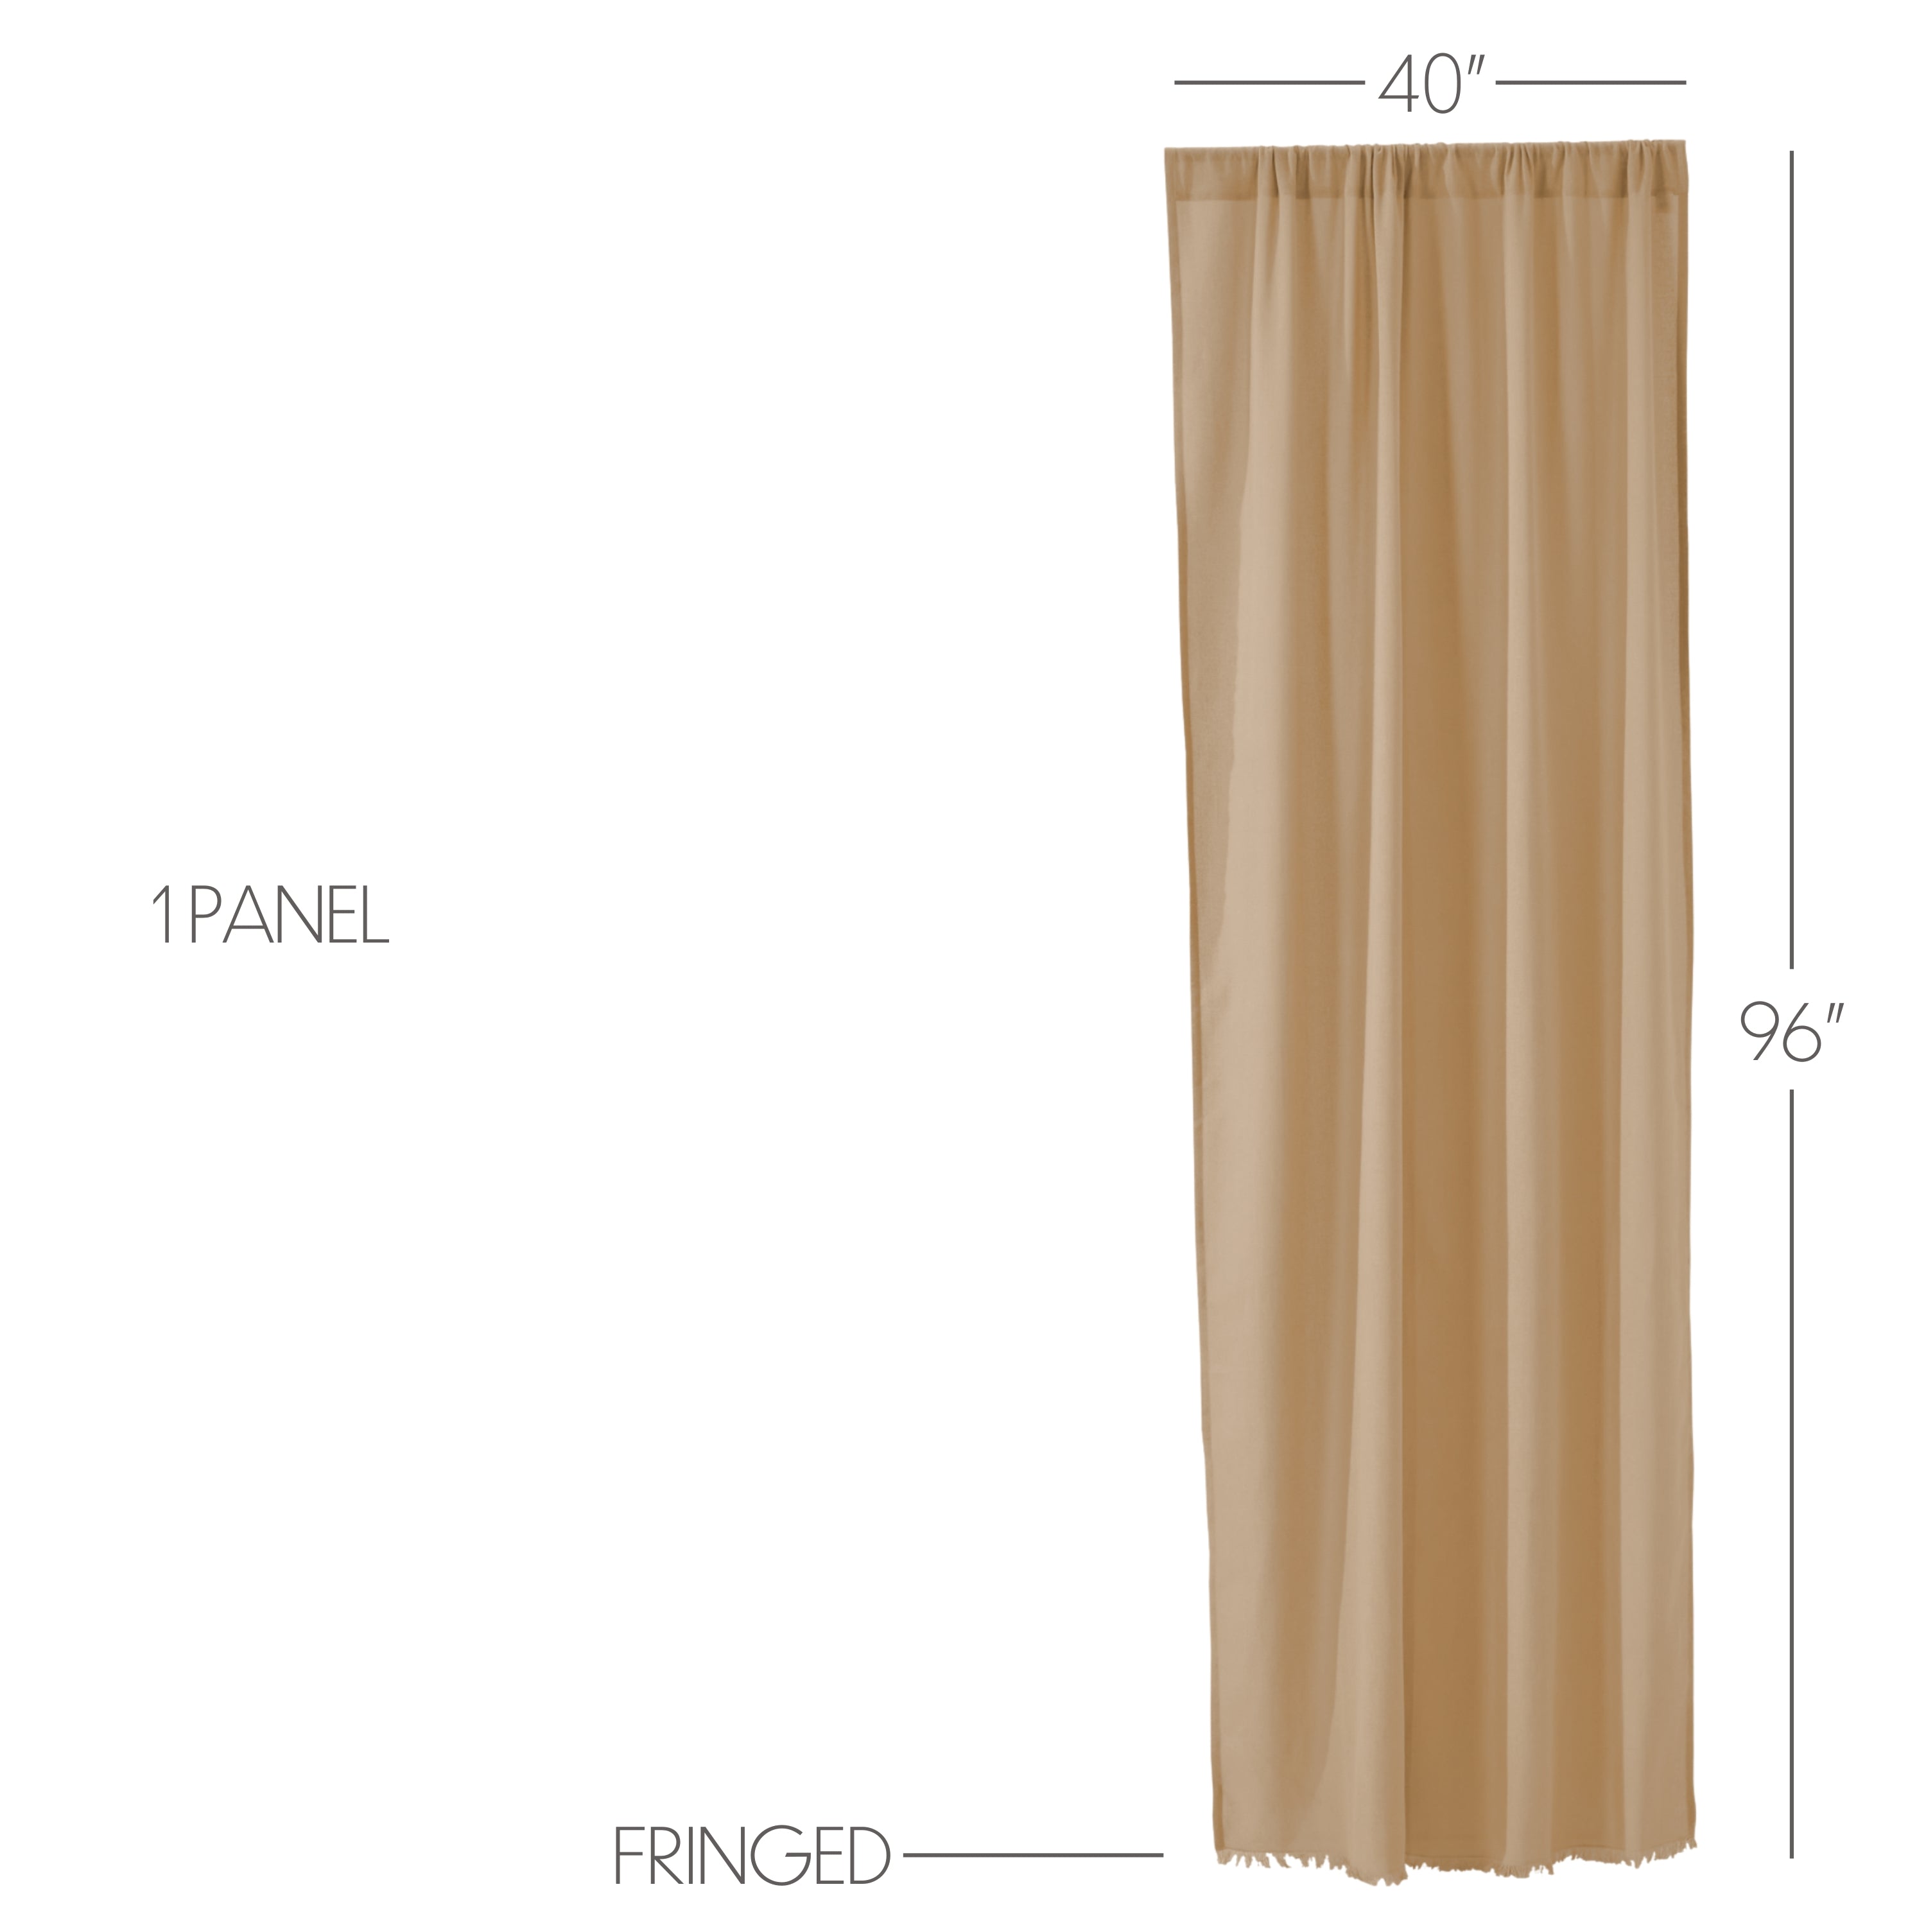 Tobacco Cloth Khaki Panel Curtain 96"x40" VHC Brands